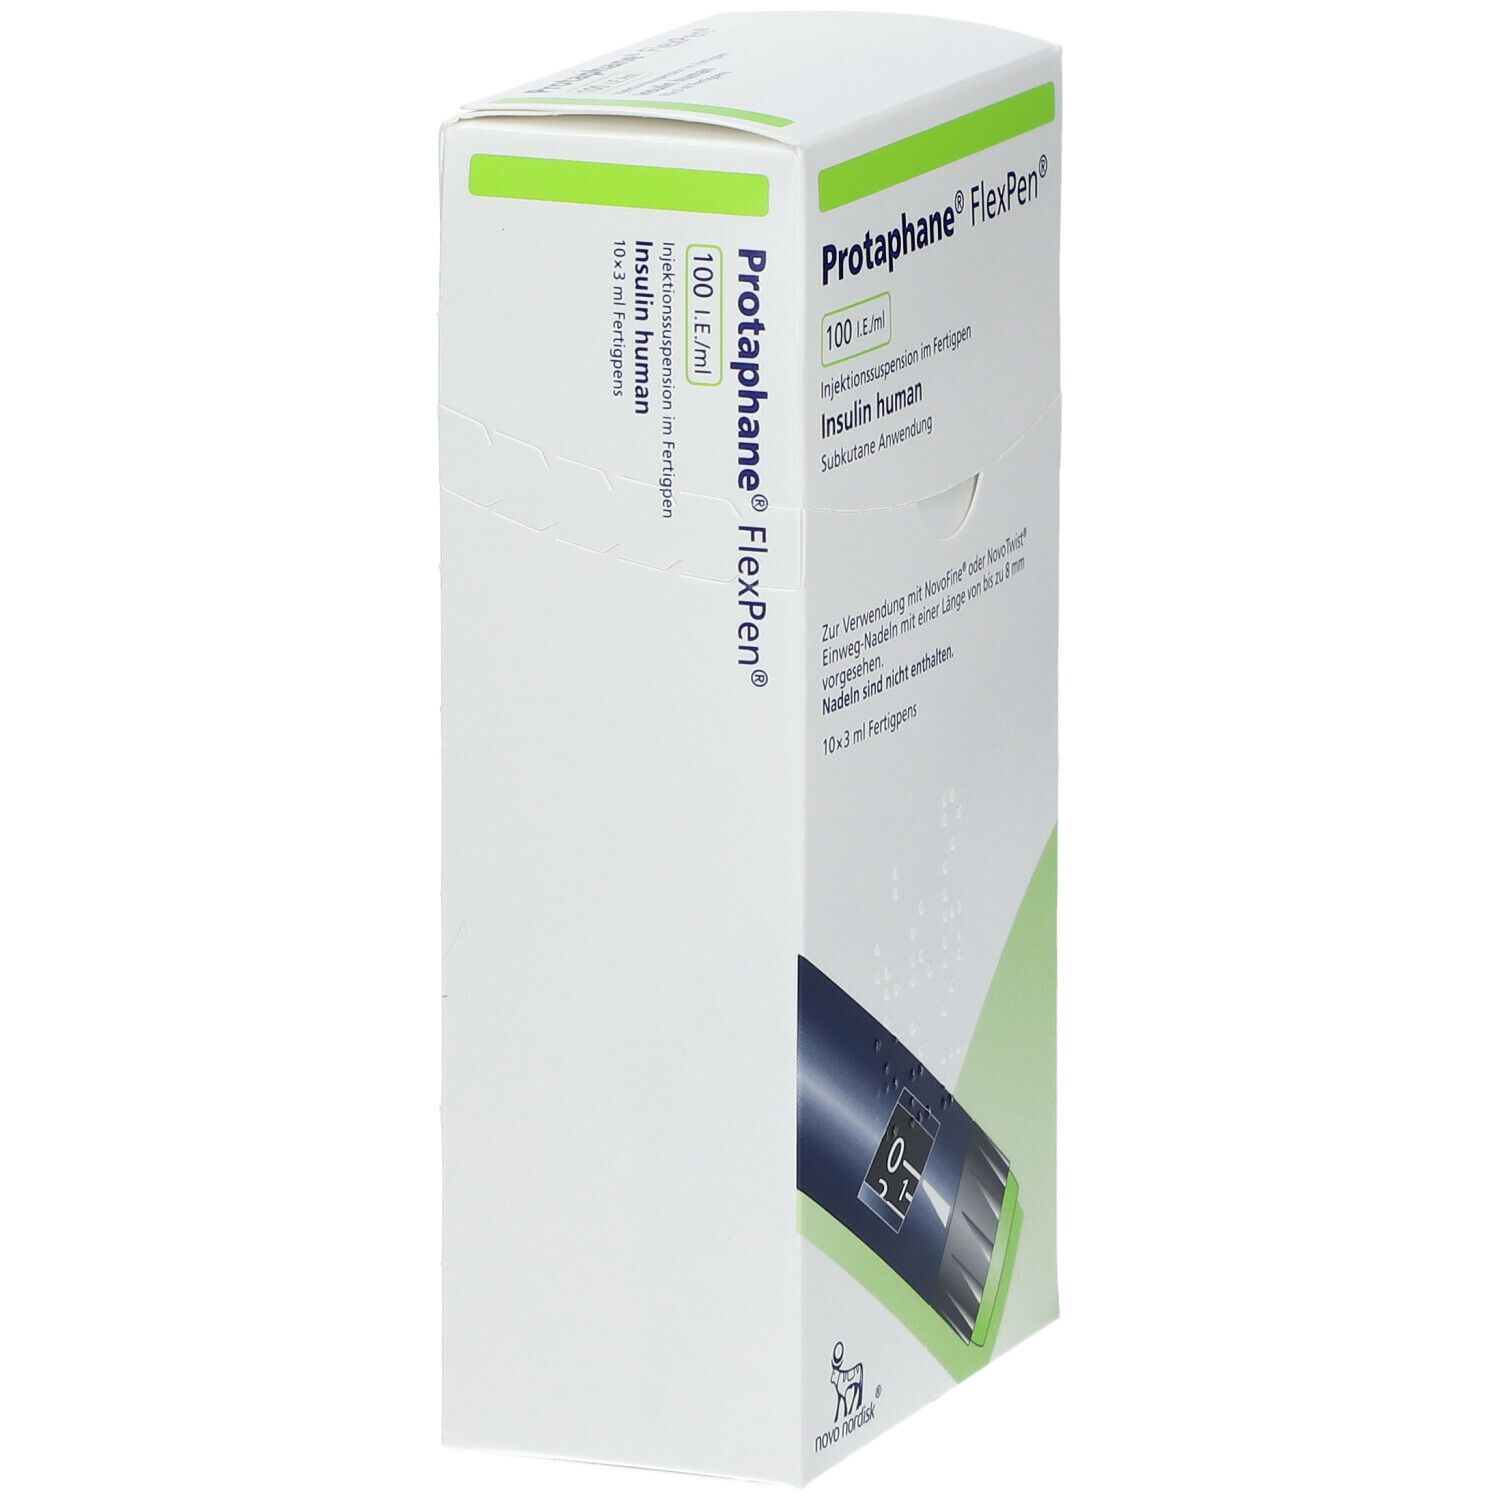 Protaphane® FlexPen® 100 I.E./ml